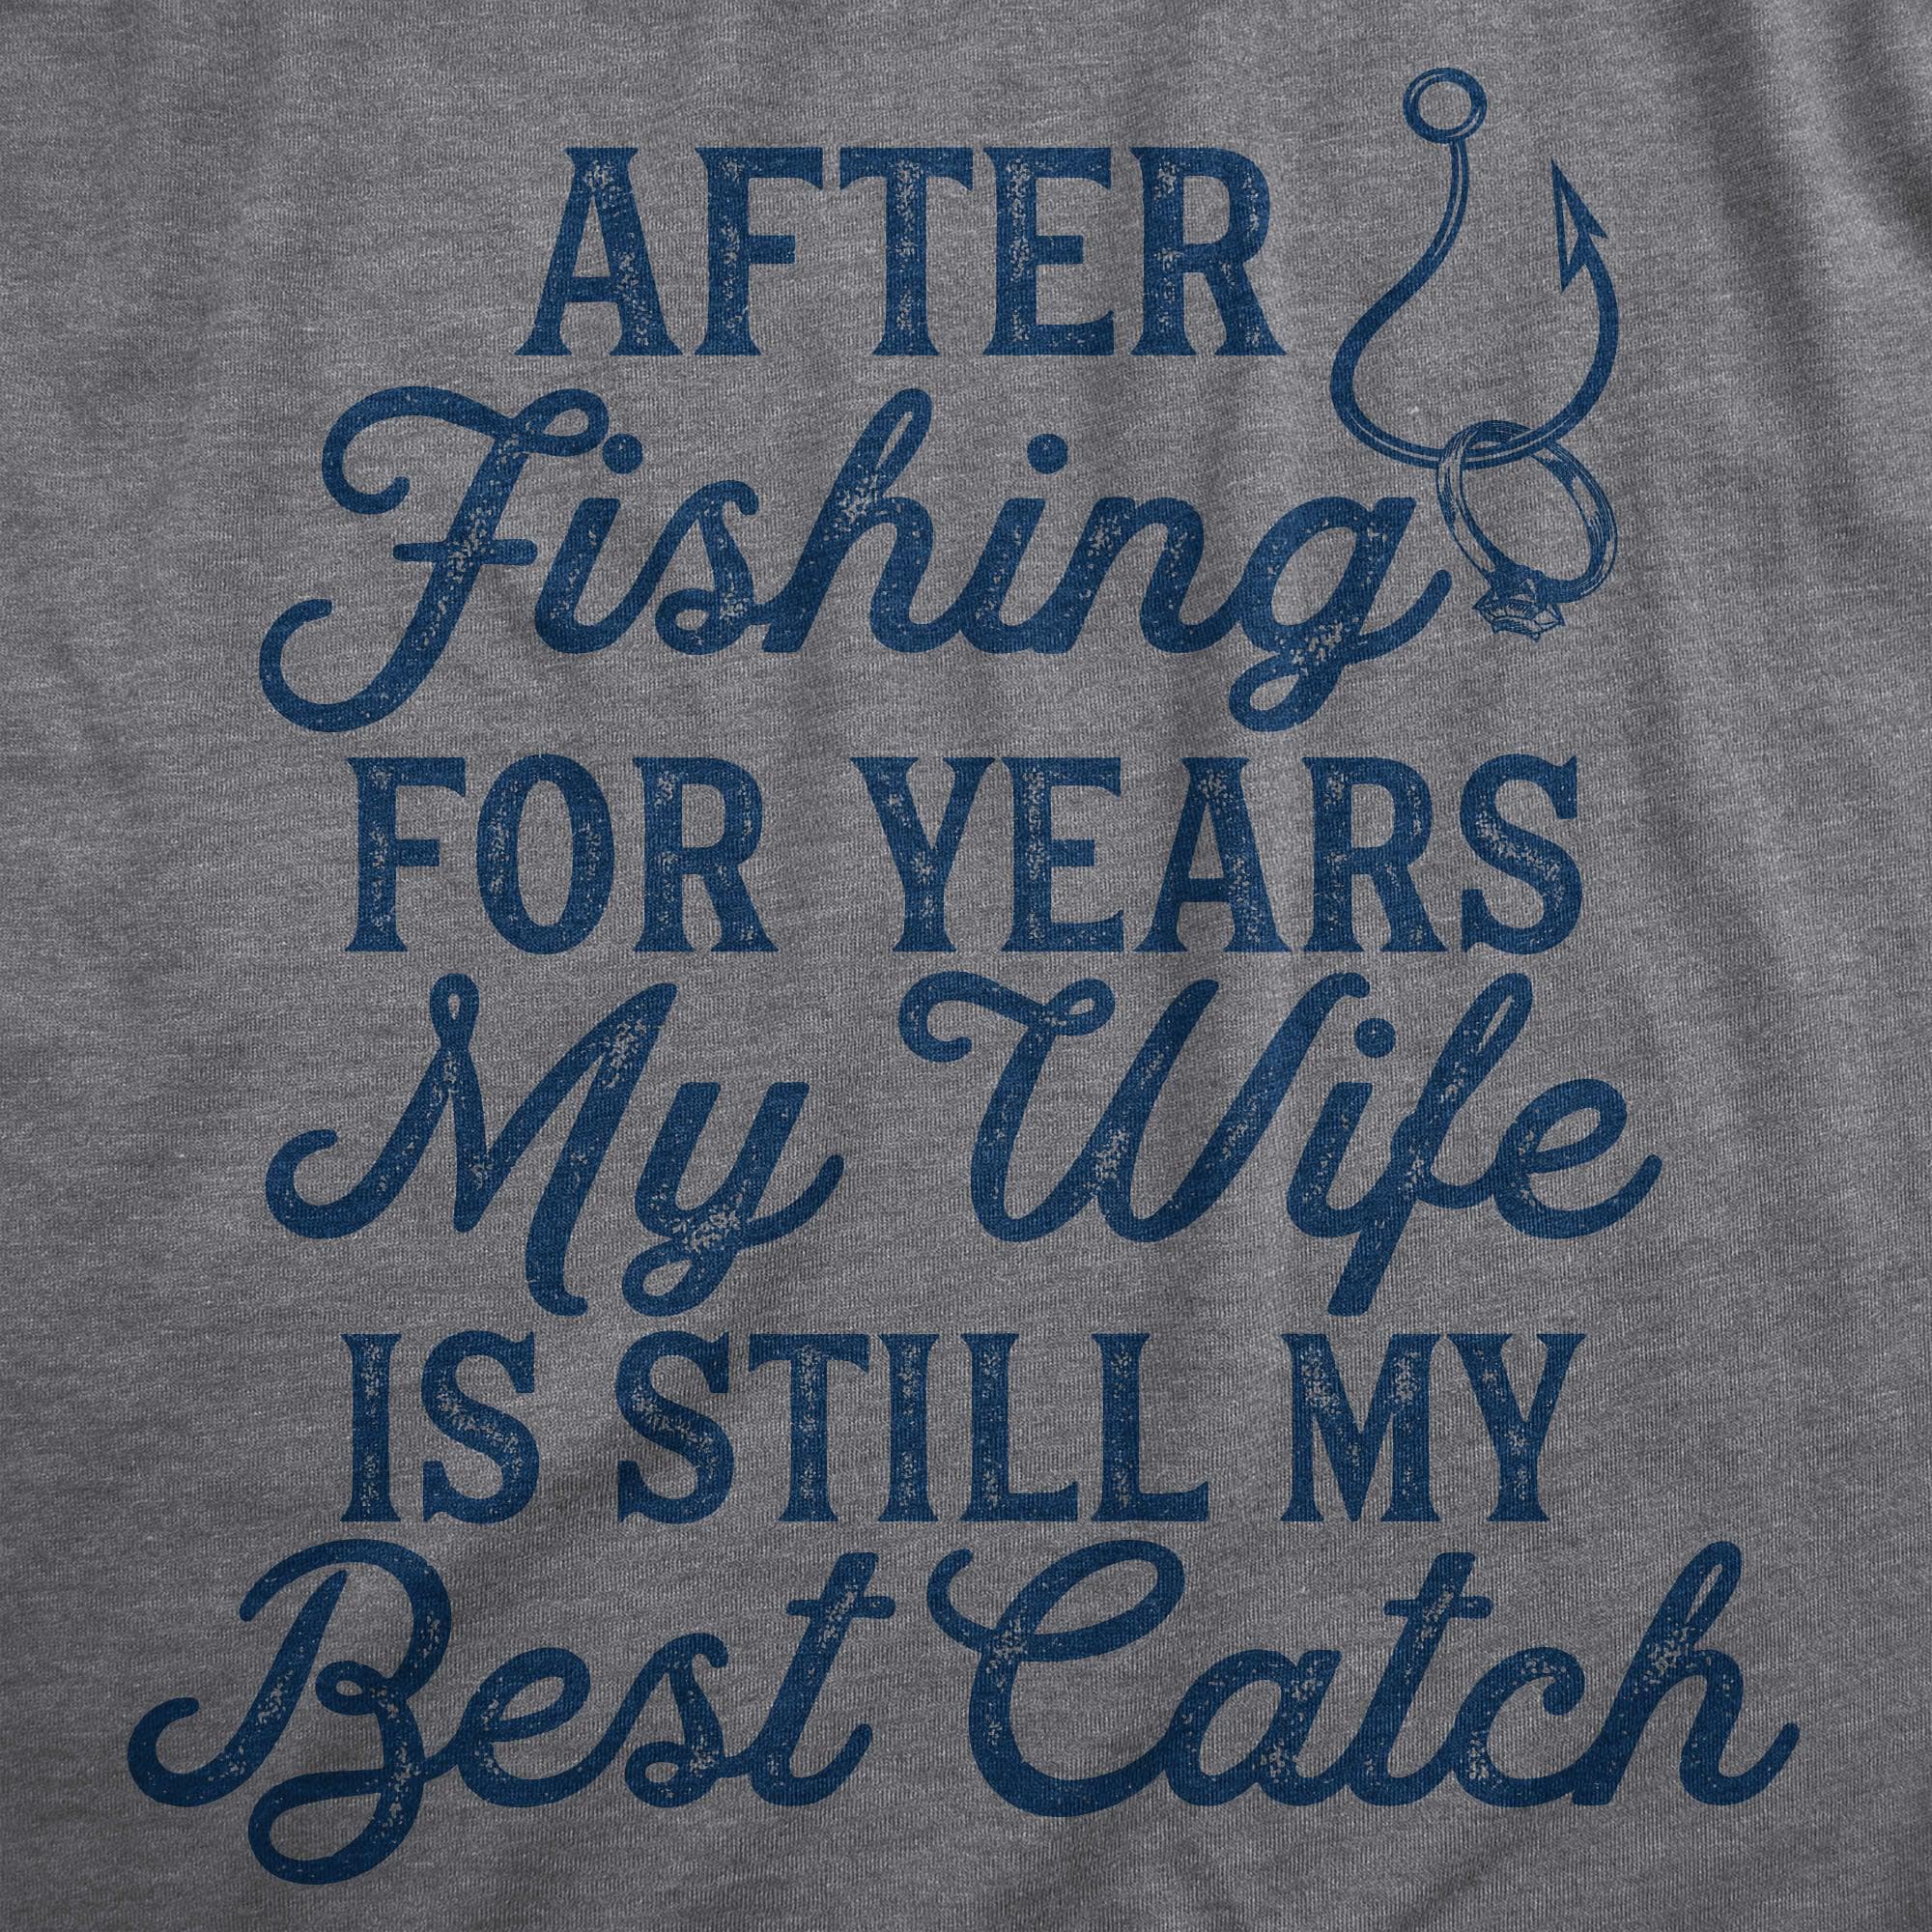 My Wife Is Still My Best Catch Men's Tshirt  -  Crazy Dog T-Shirts